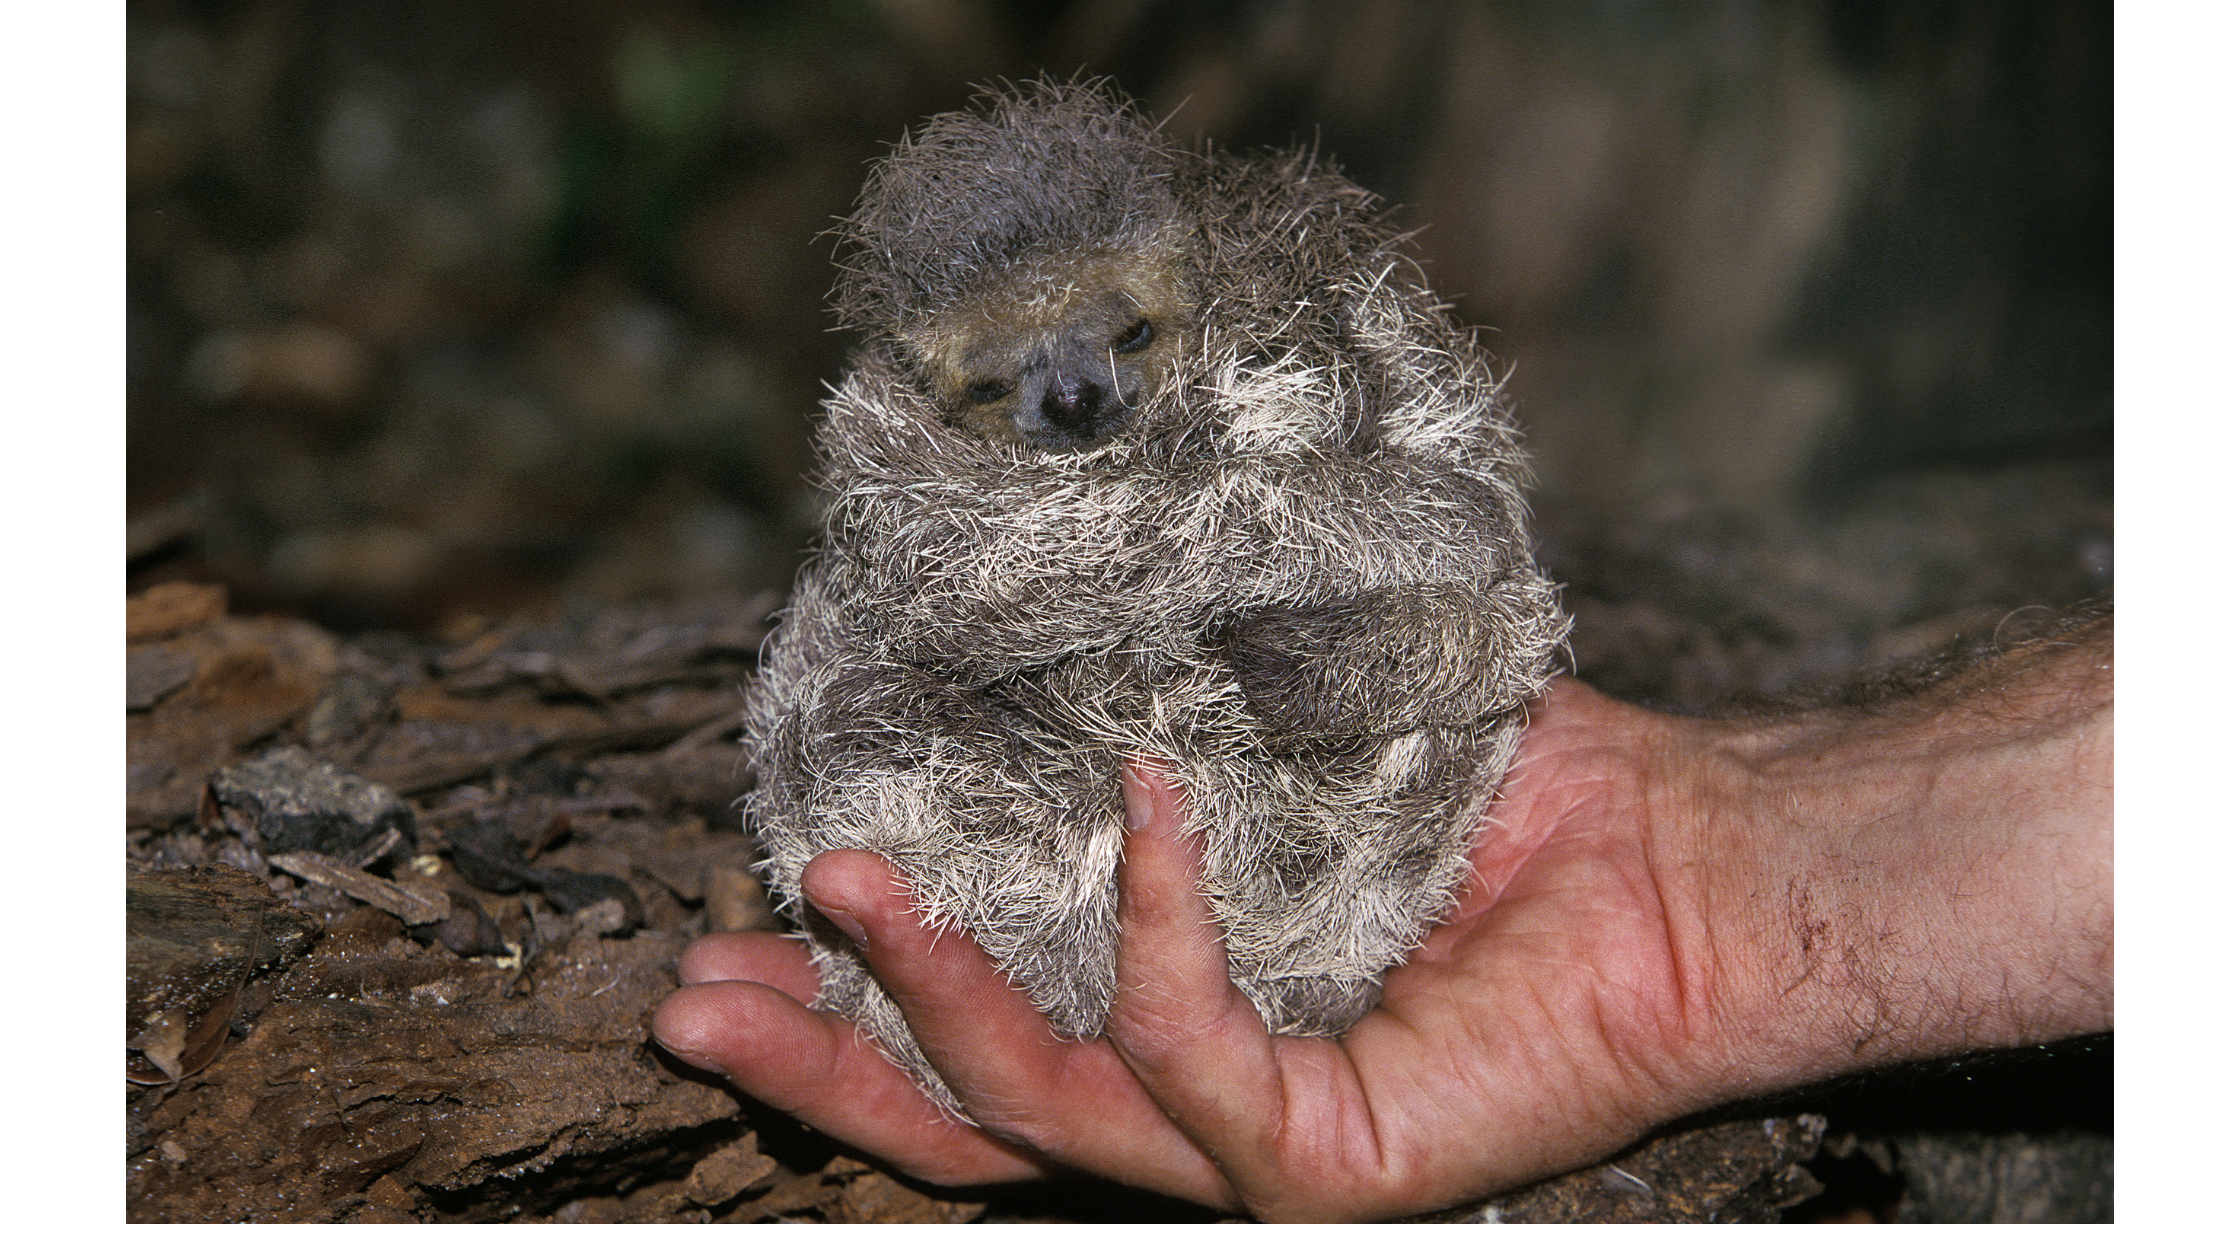 pygmy sloth